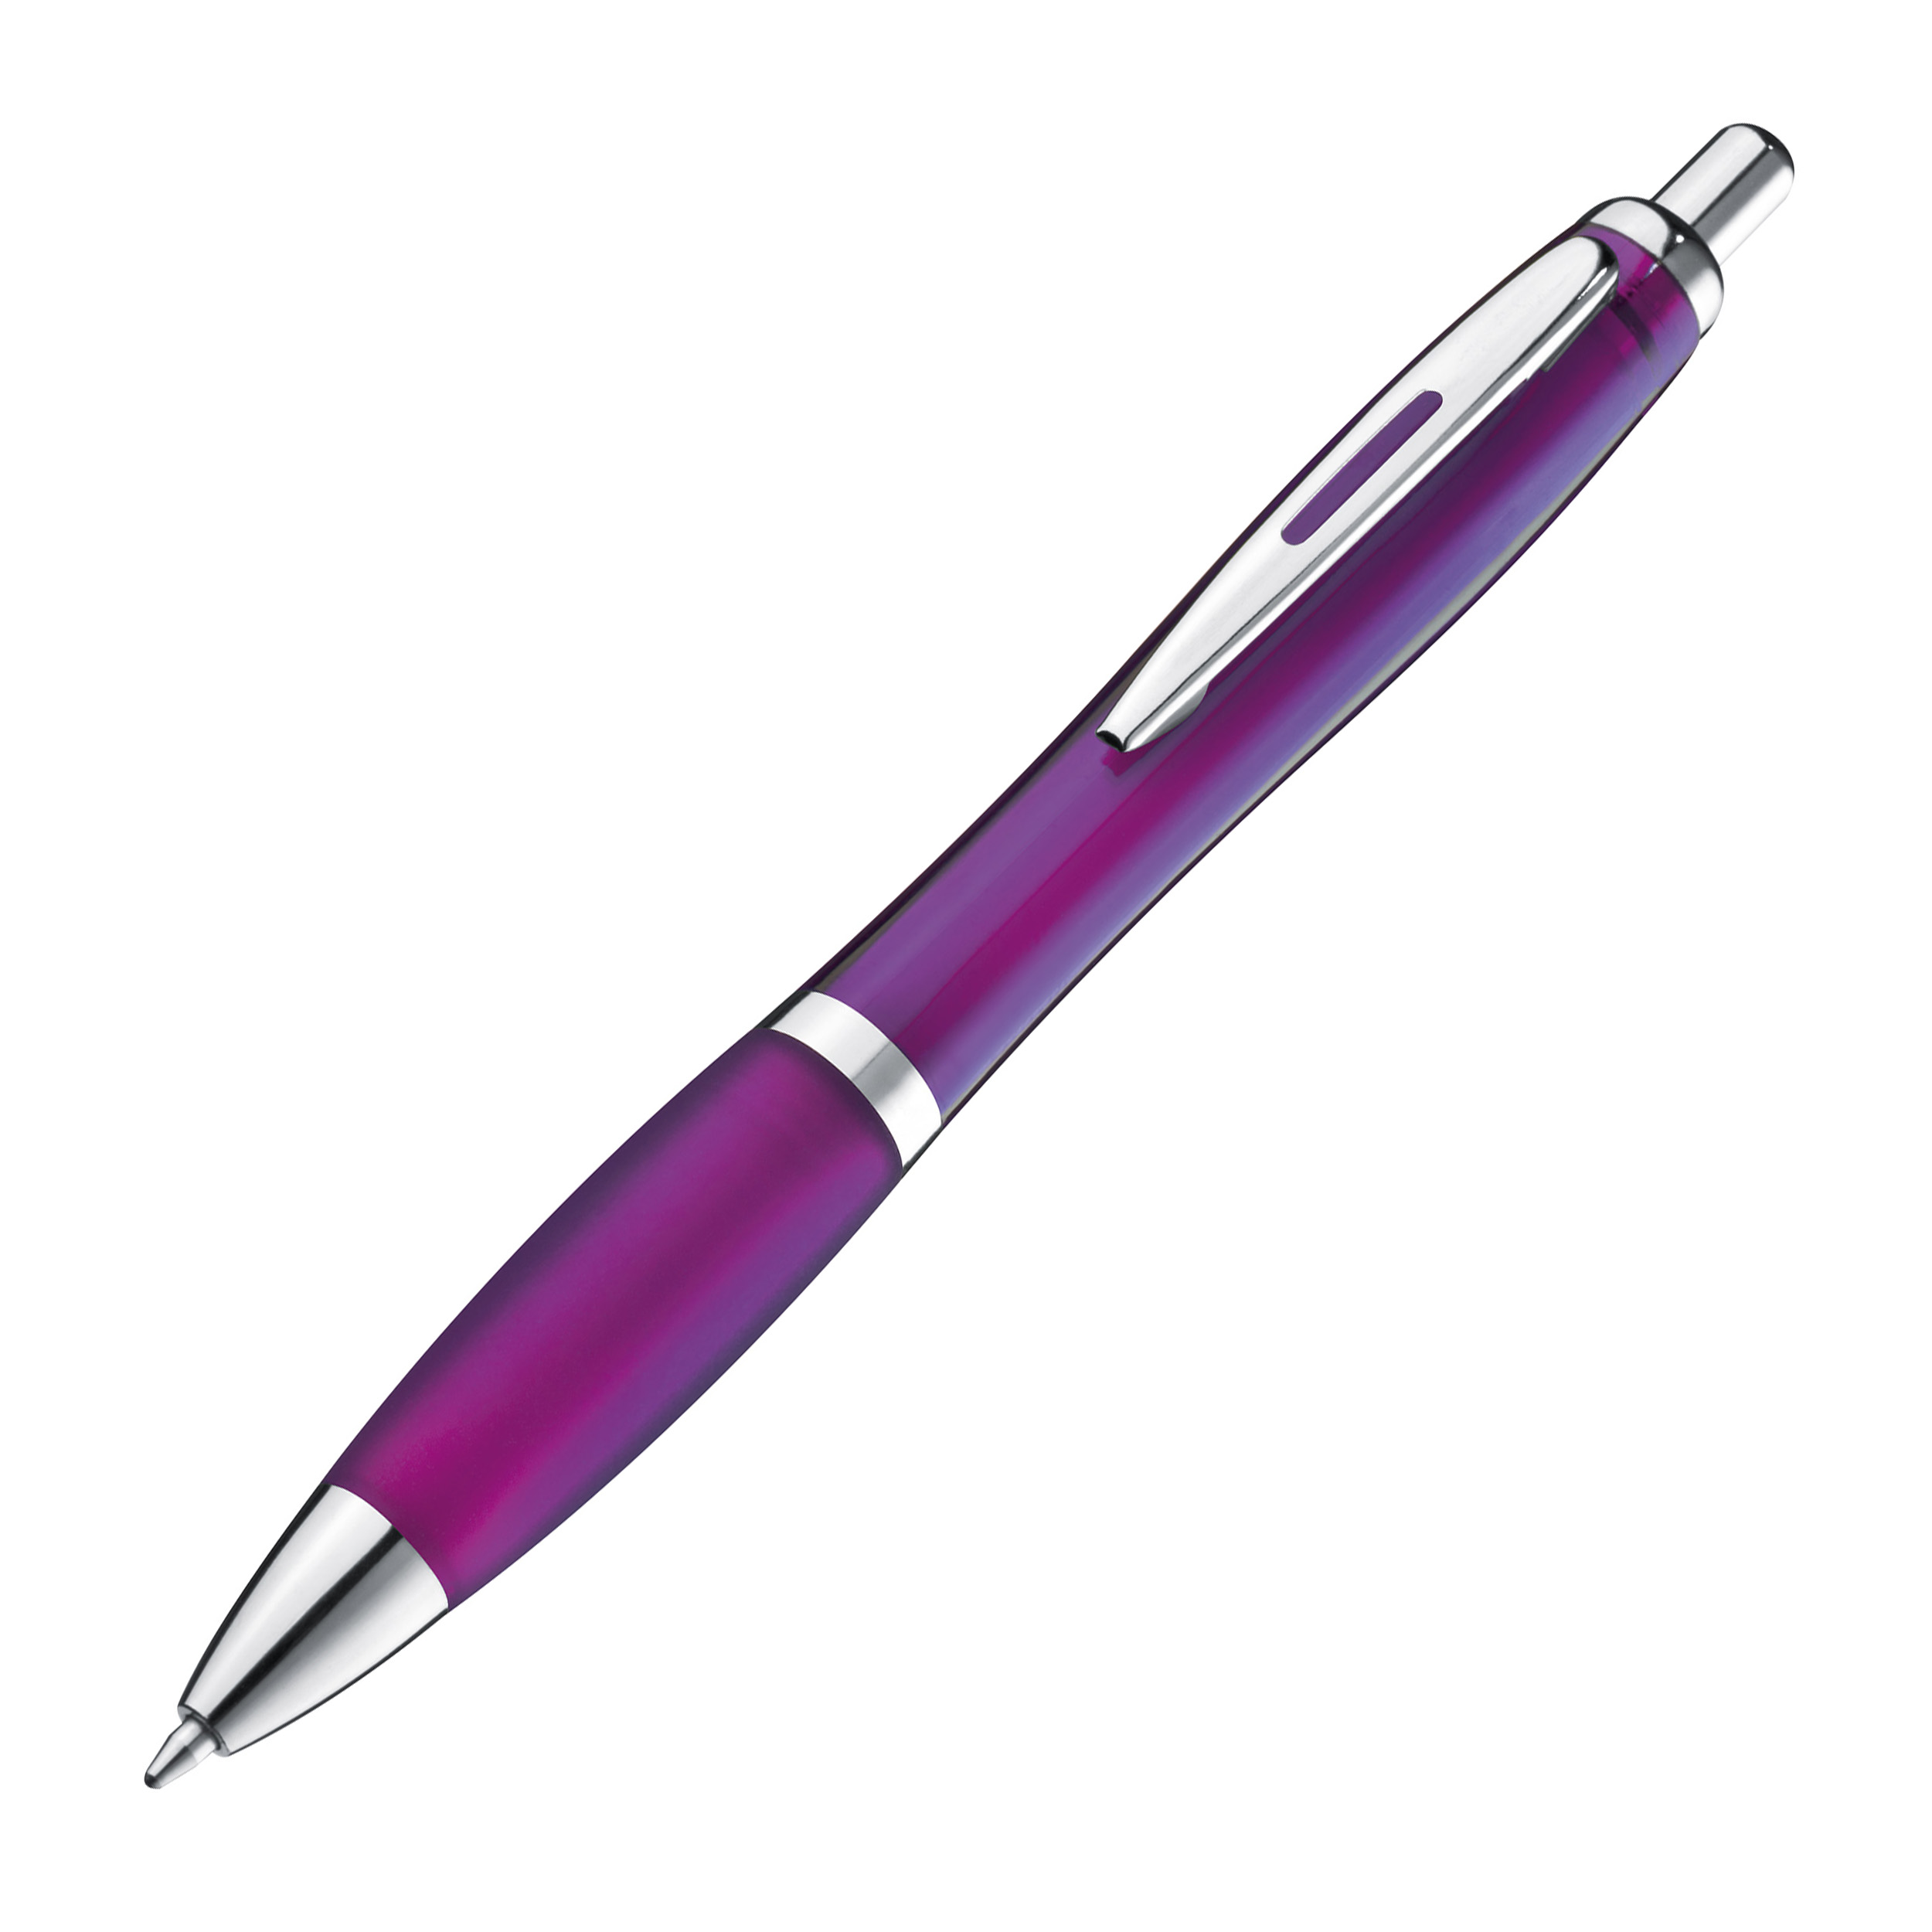 Kugelschreiber mit farbig transparentem Schaft